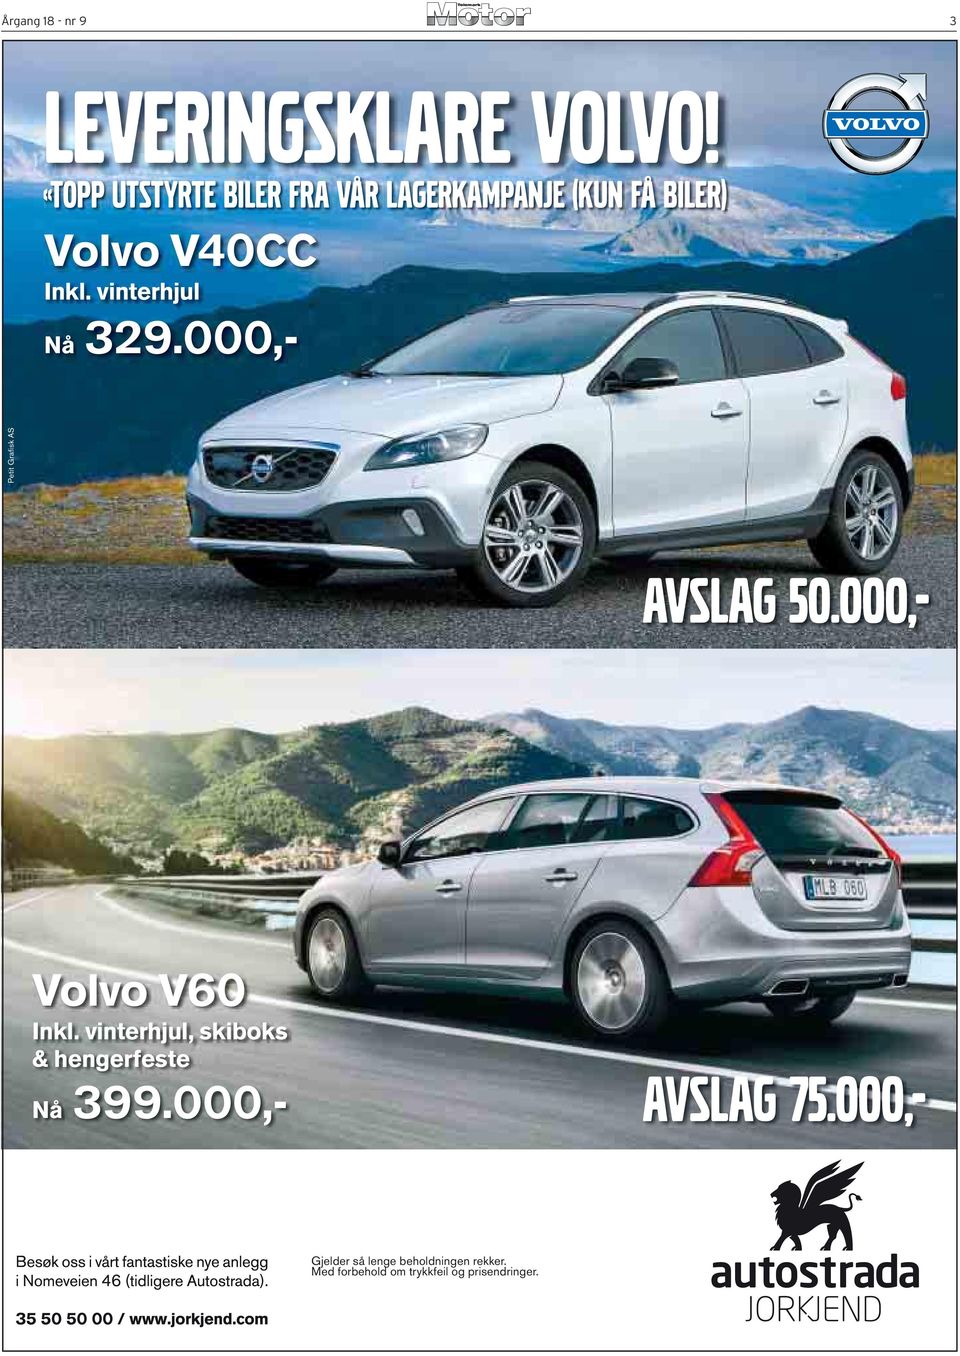 vinterhjul Nå 329.000,- Petit Grafi sk AS avslag 50.000,- Volvo V60 Inkl.